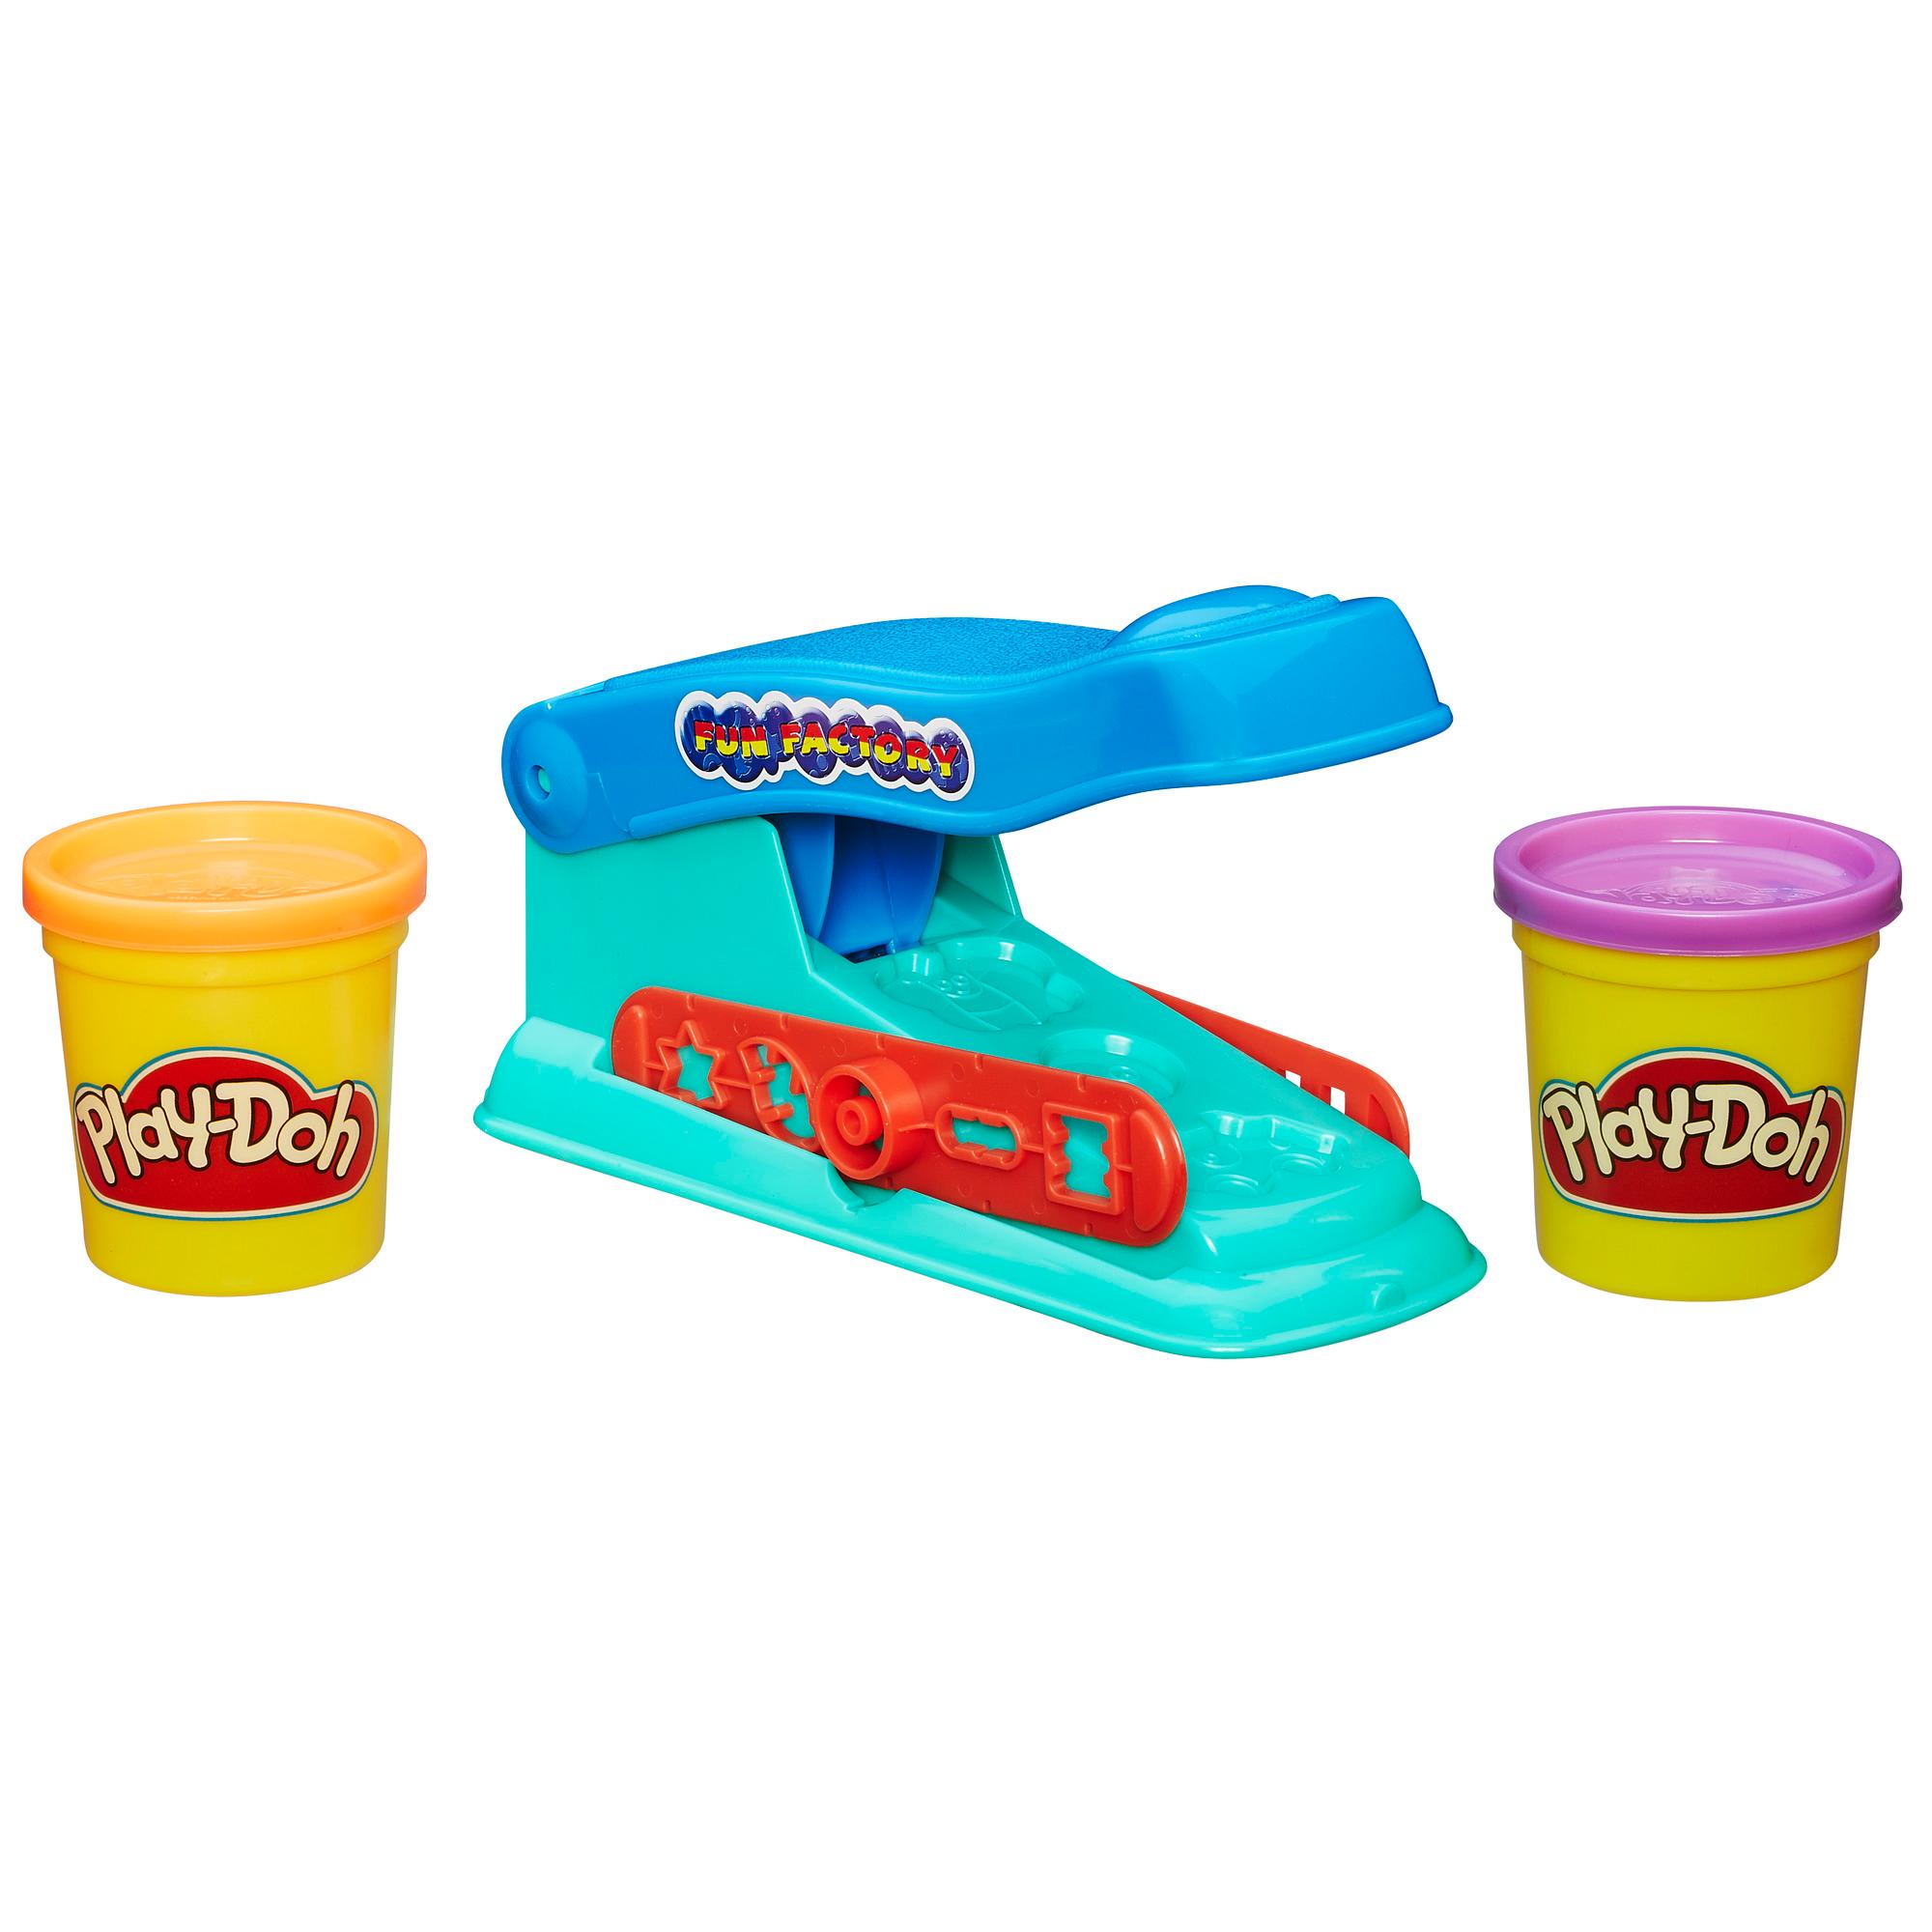 Play-Doh Fun Factory Set - image 1 of 2